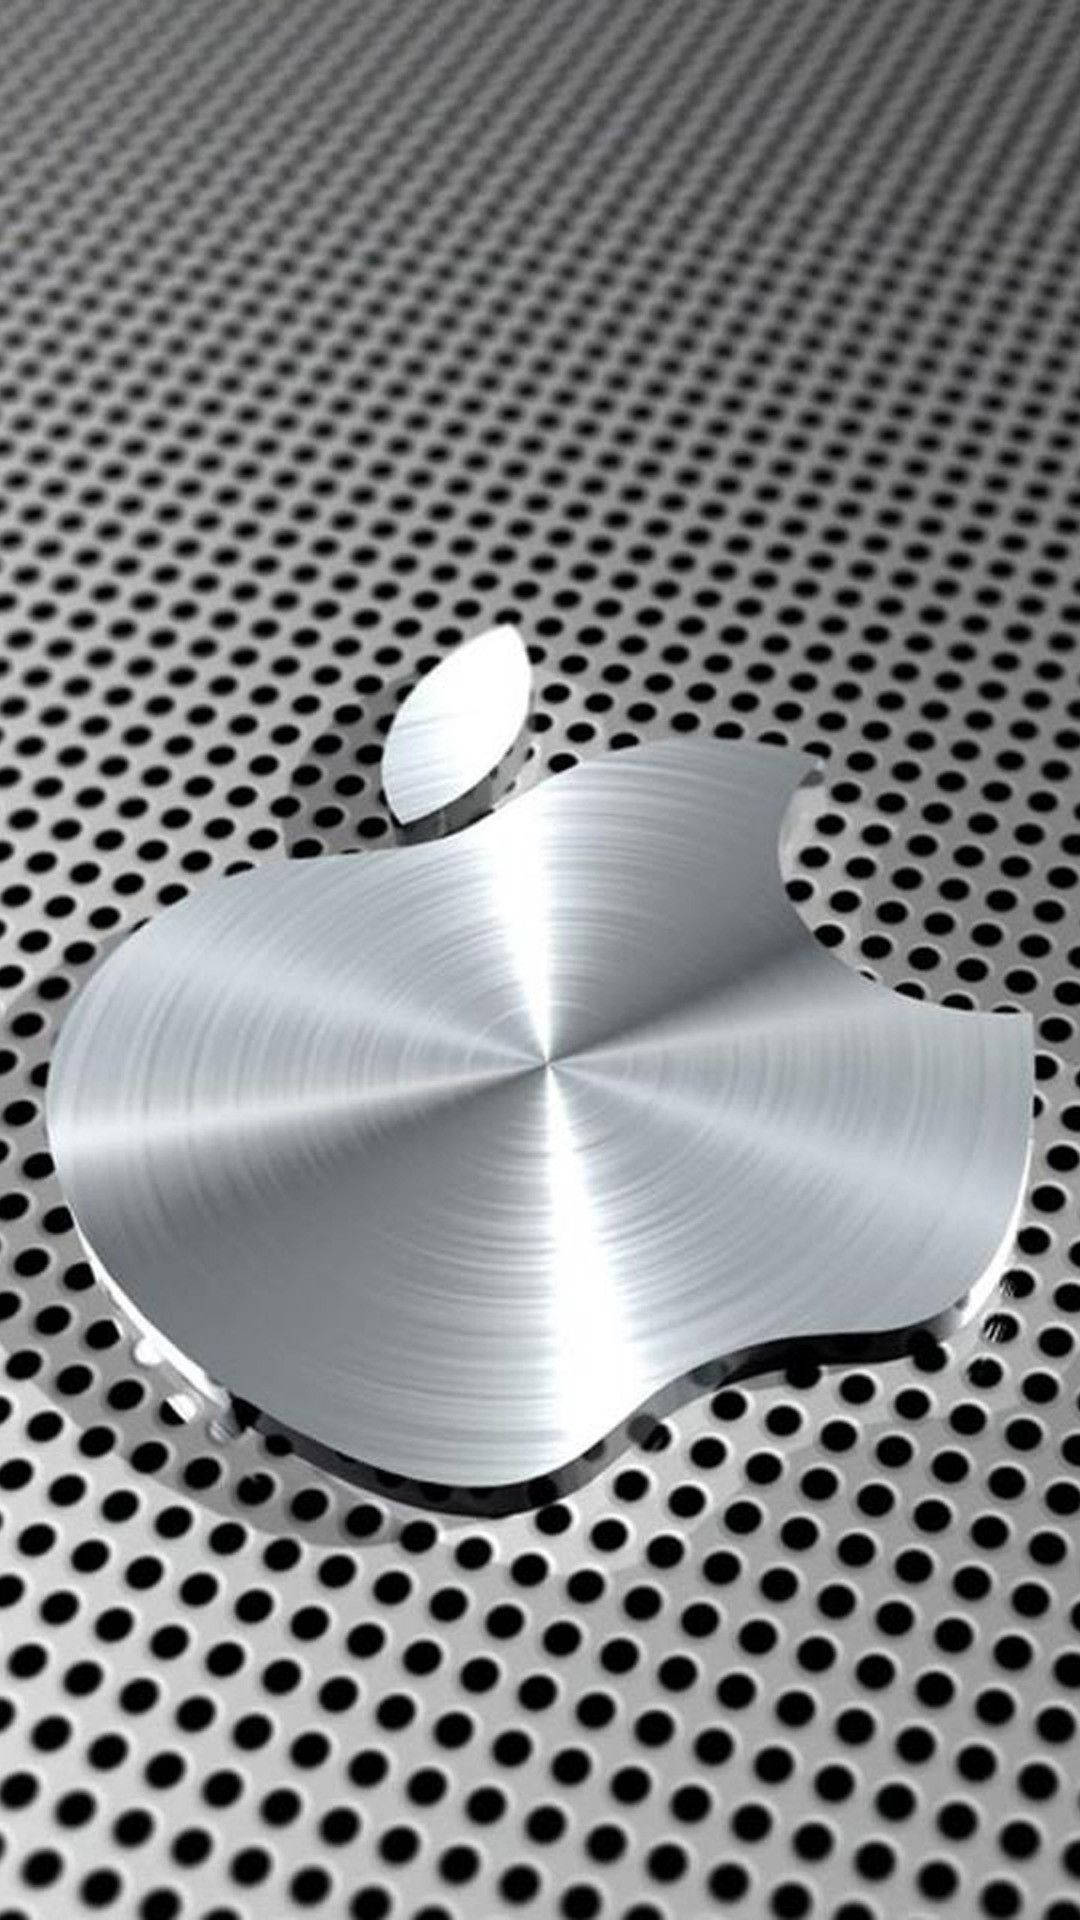 Metal 3d Apple Iphone Logo On Texture